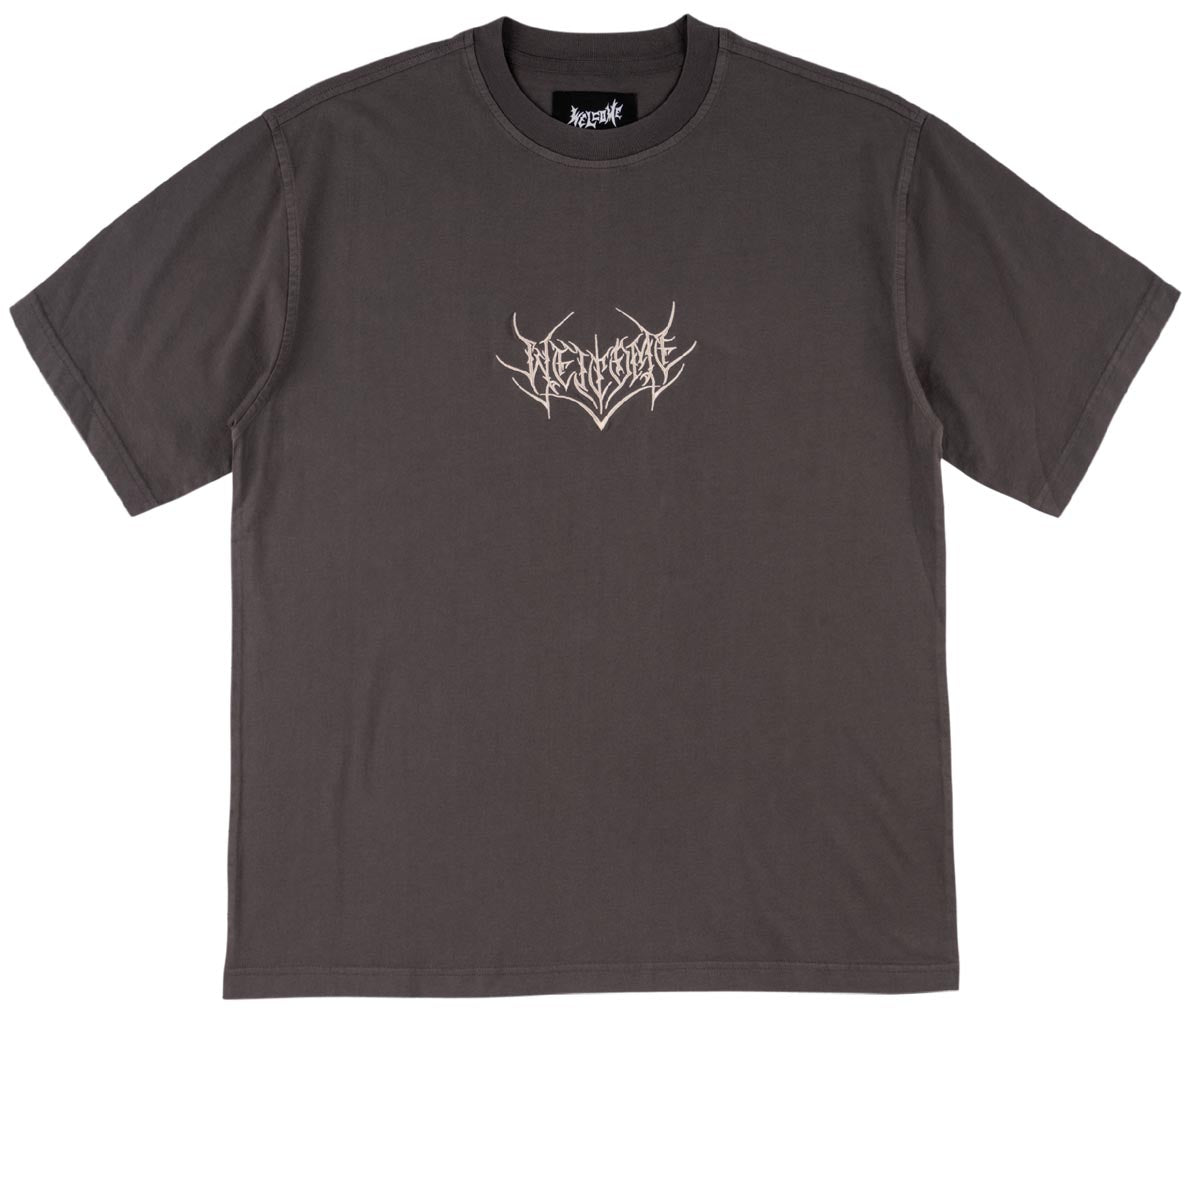 Welcome Splinter T-Shirt - Raven image 2